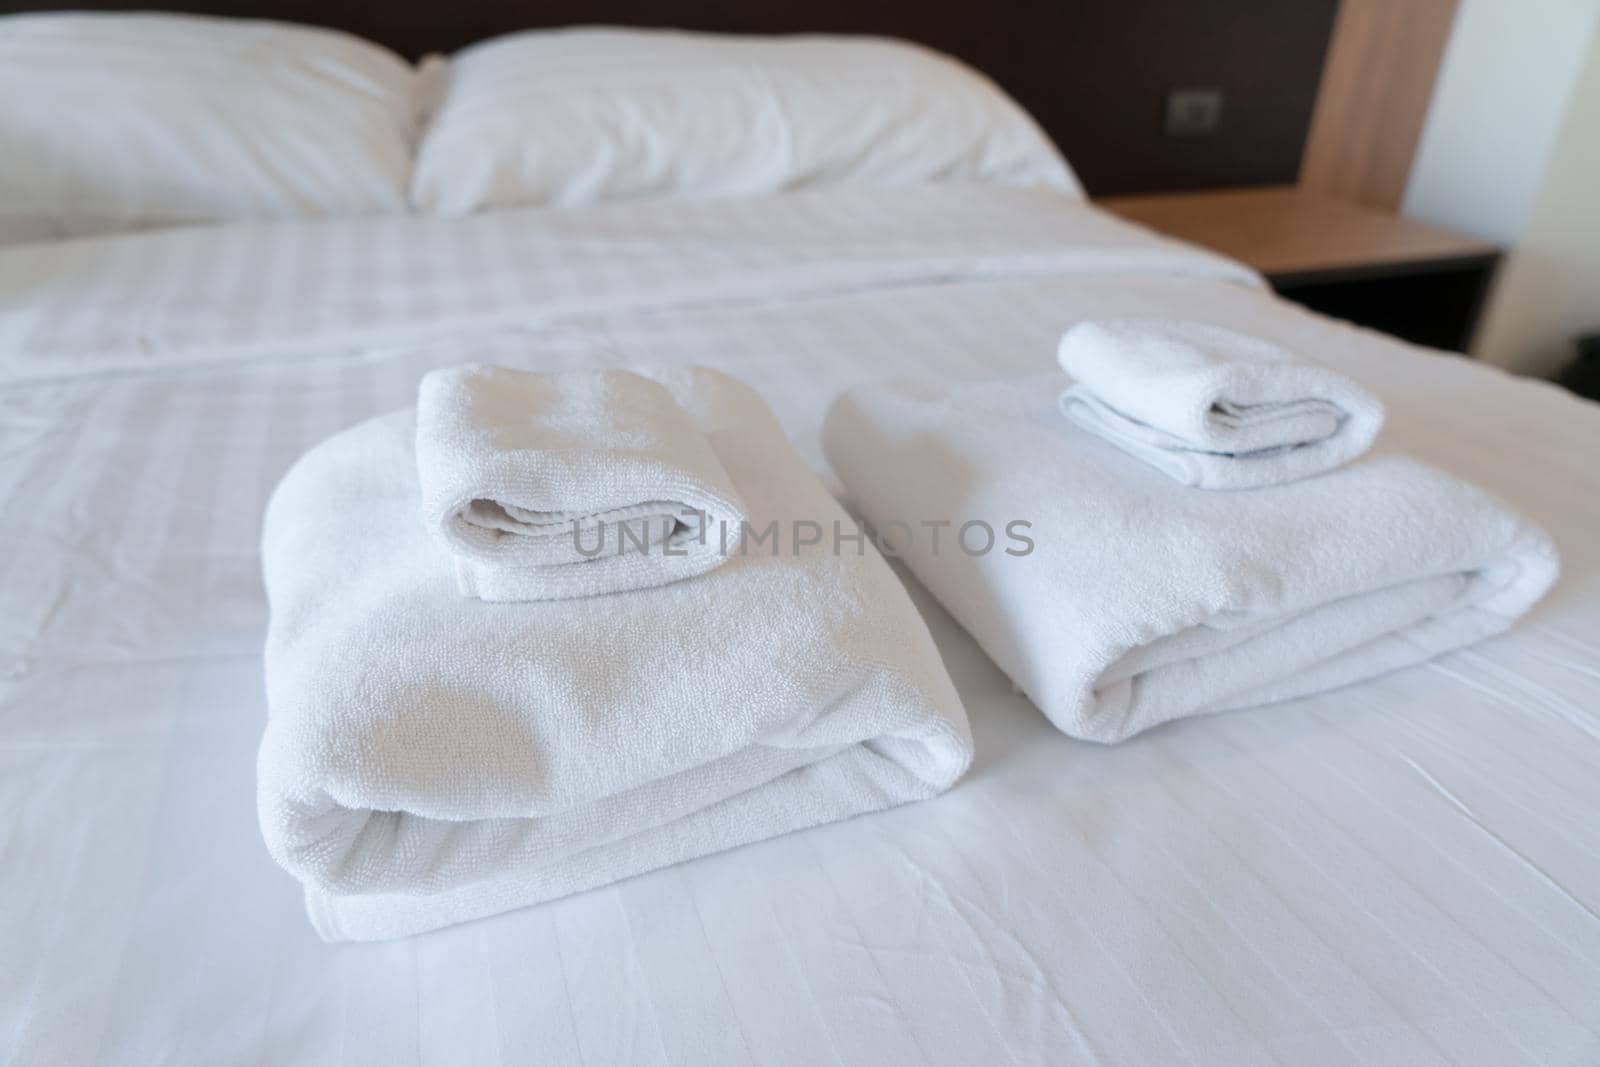 Stack towel set on bed in modern bedroom at hotel